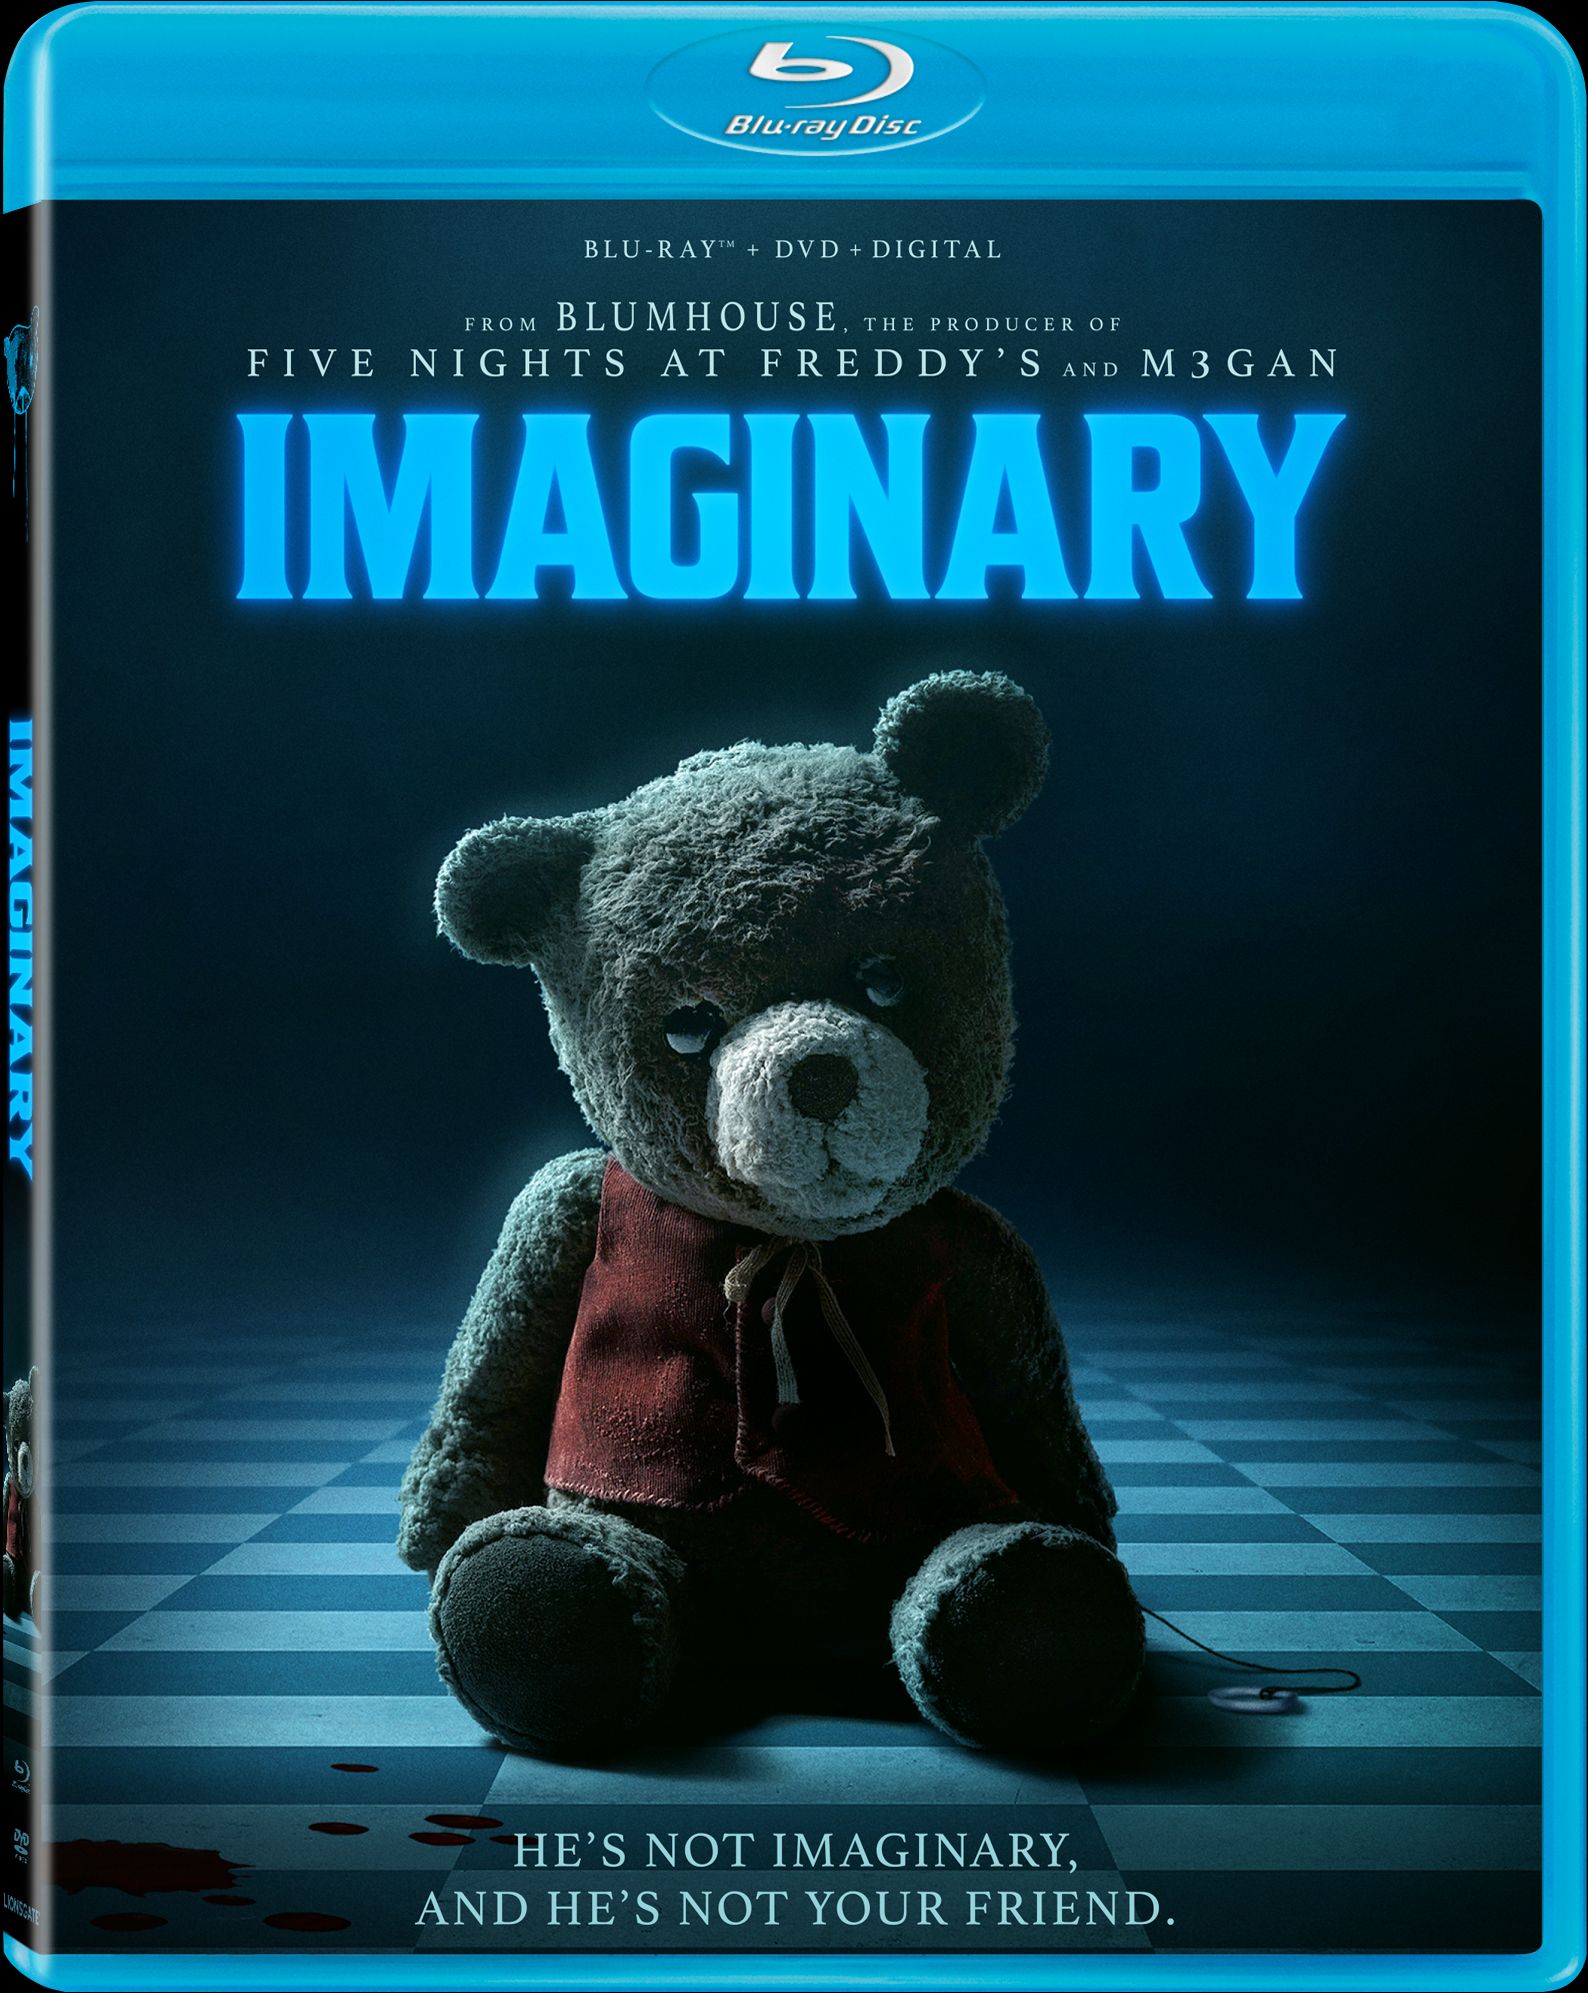 Принесите медведя Чонси домой с выпуском Imaginary на DVD, Digital и Blu-ray.